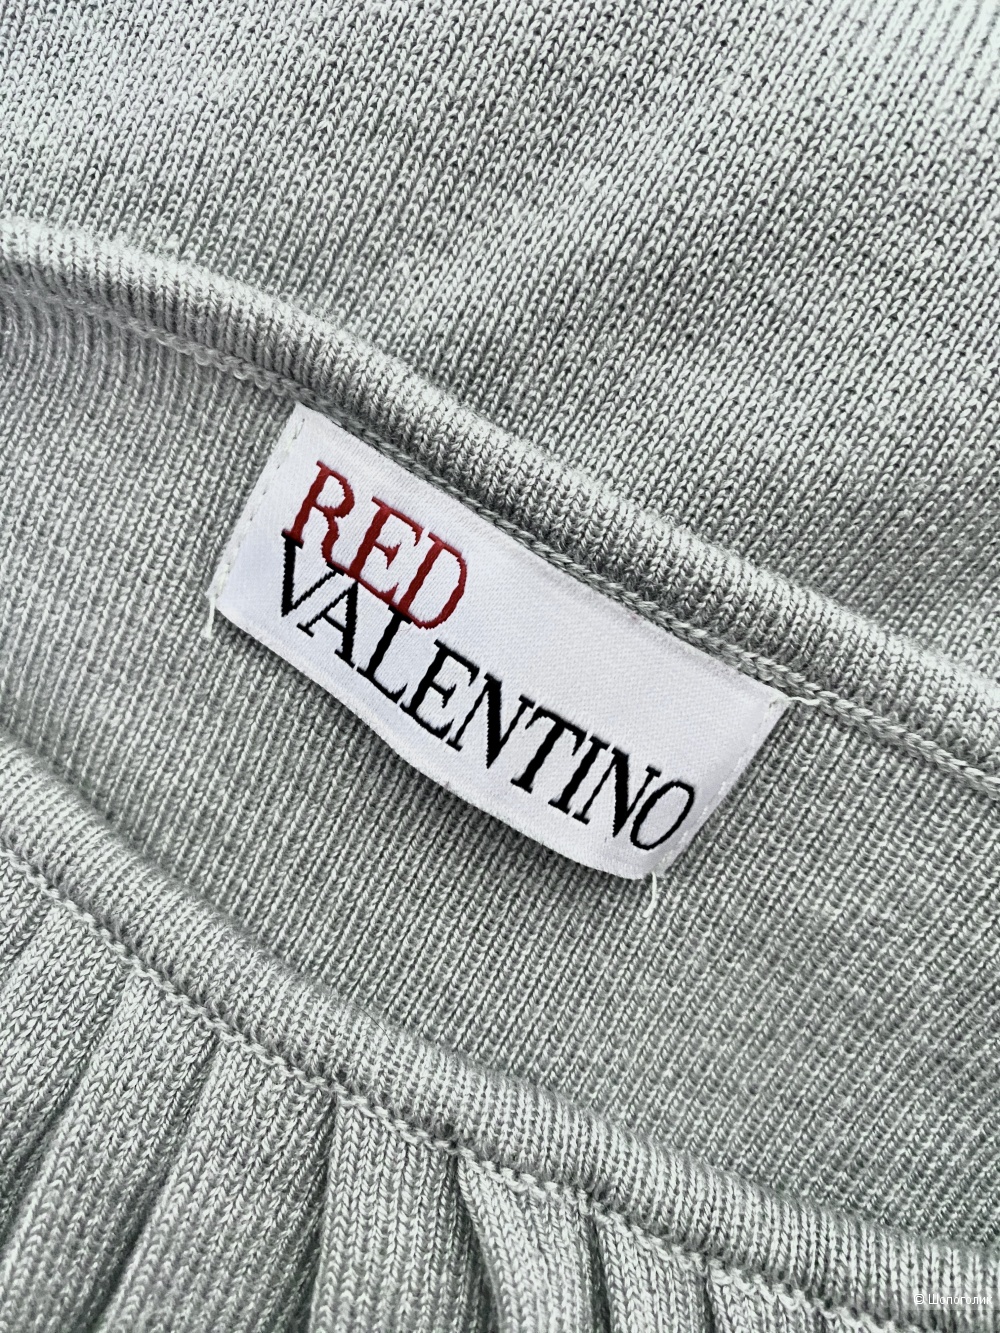 Платье Red Valentino, размер xs-s.